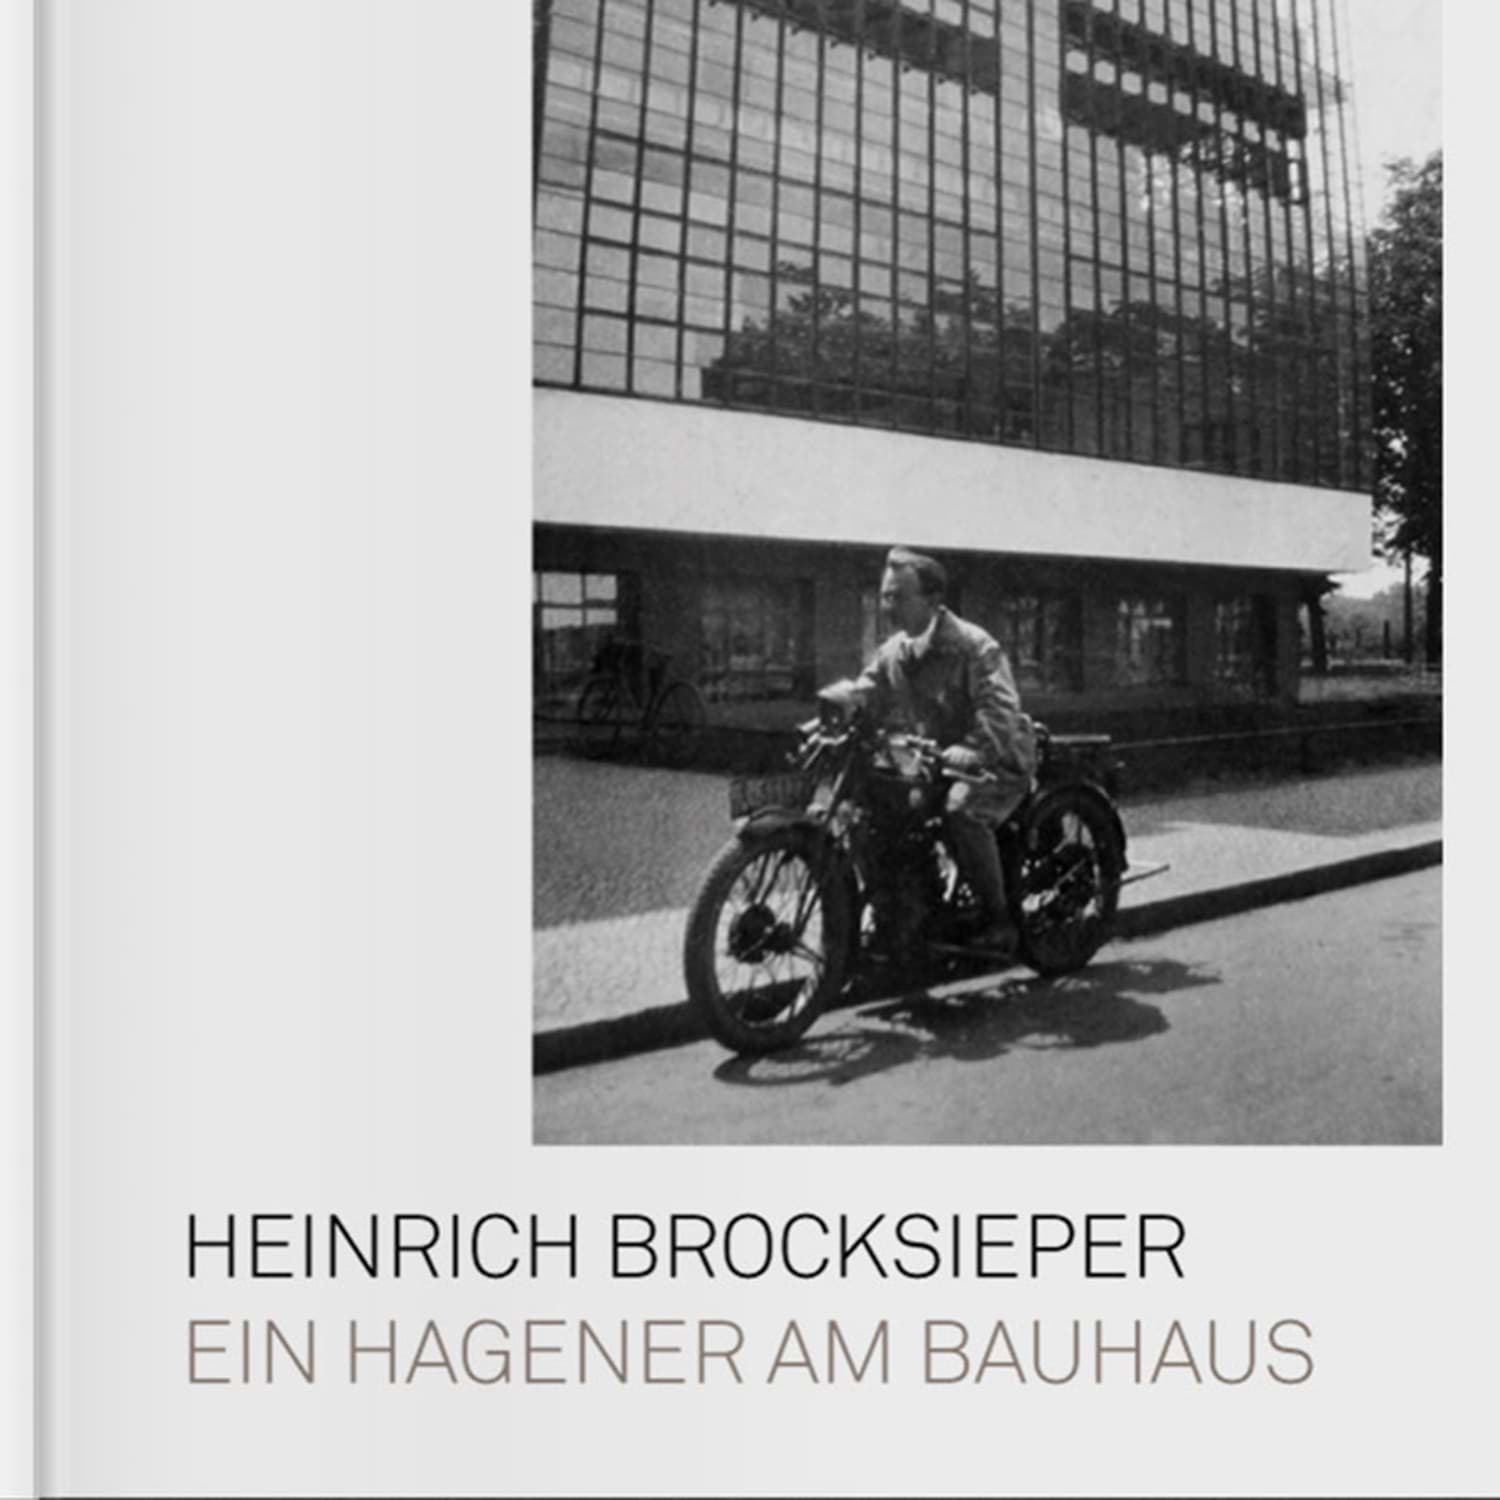 Ein Hagener am Bauhaus की तस्वीर